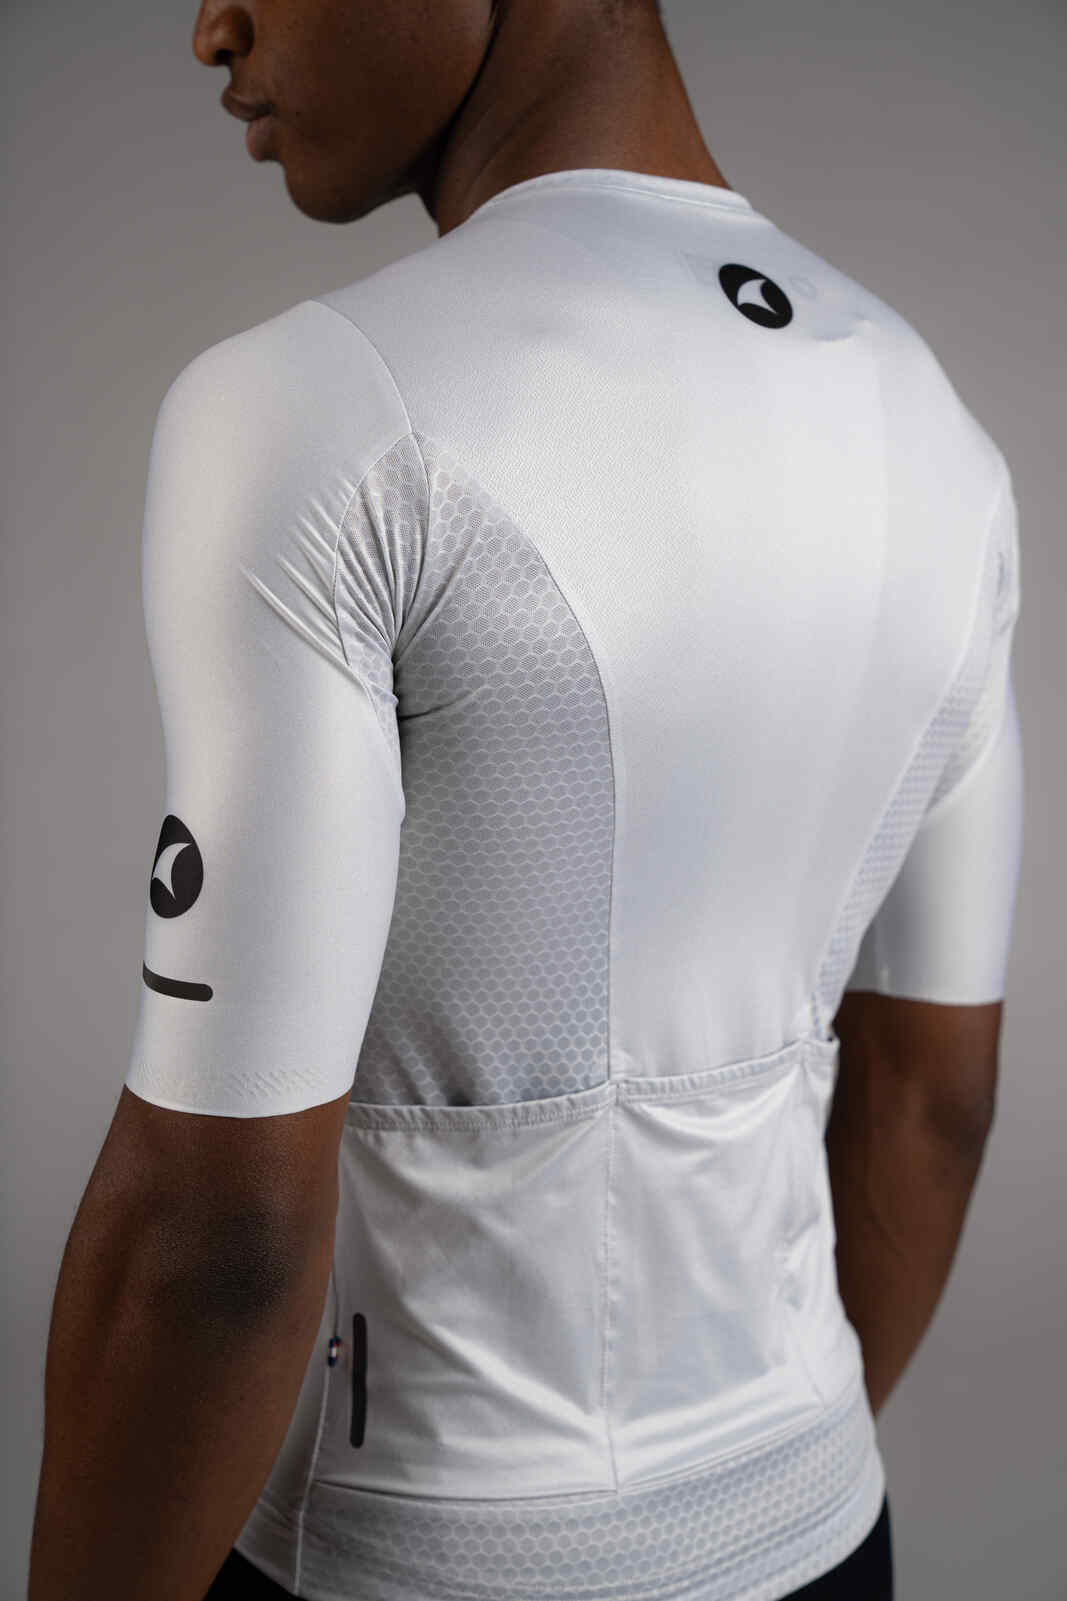 Men's Summit Aero White Cycling Jersey - Underarm Mesh Fabric